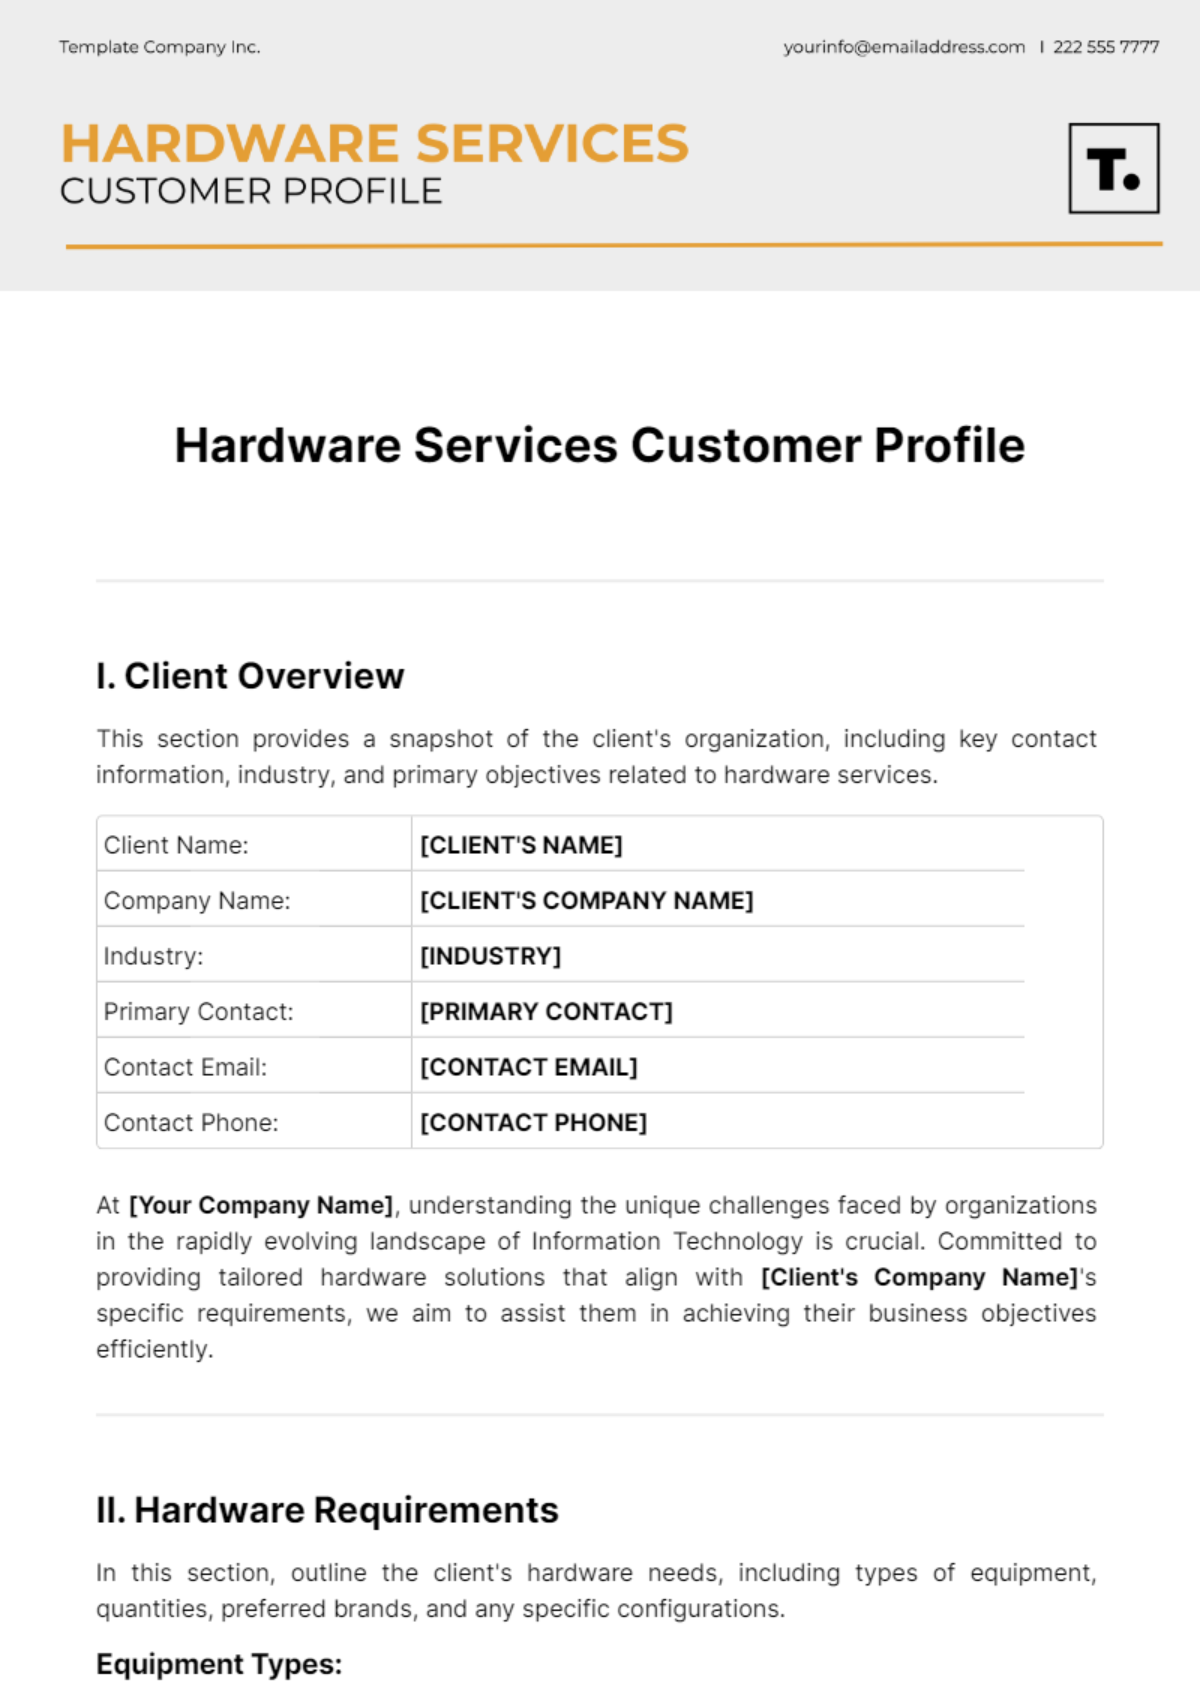 Hardware Services Customer Profile Template